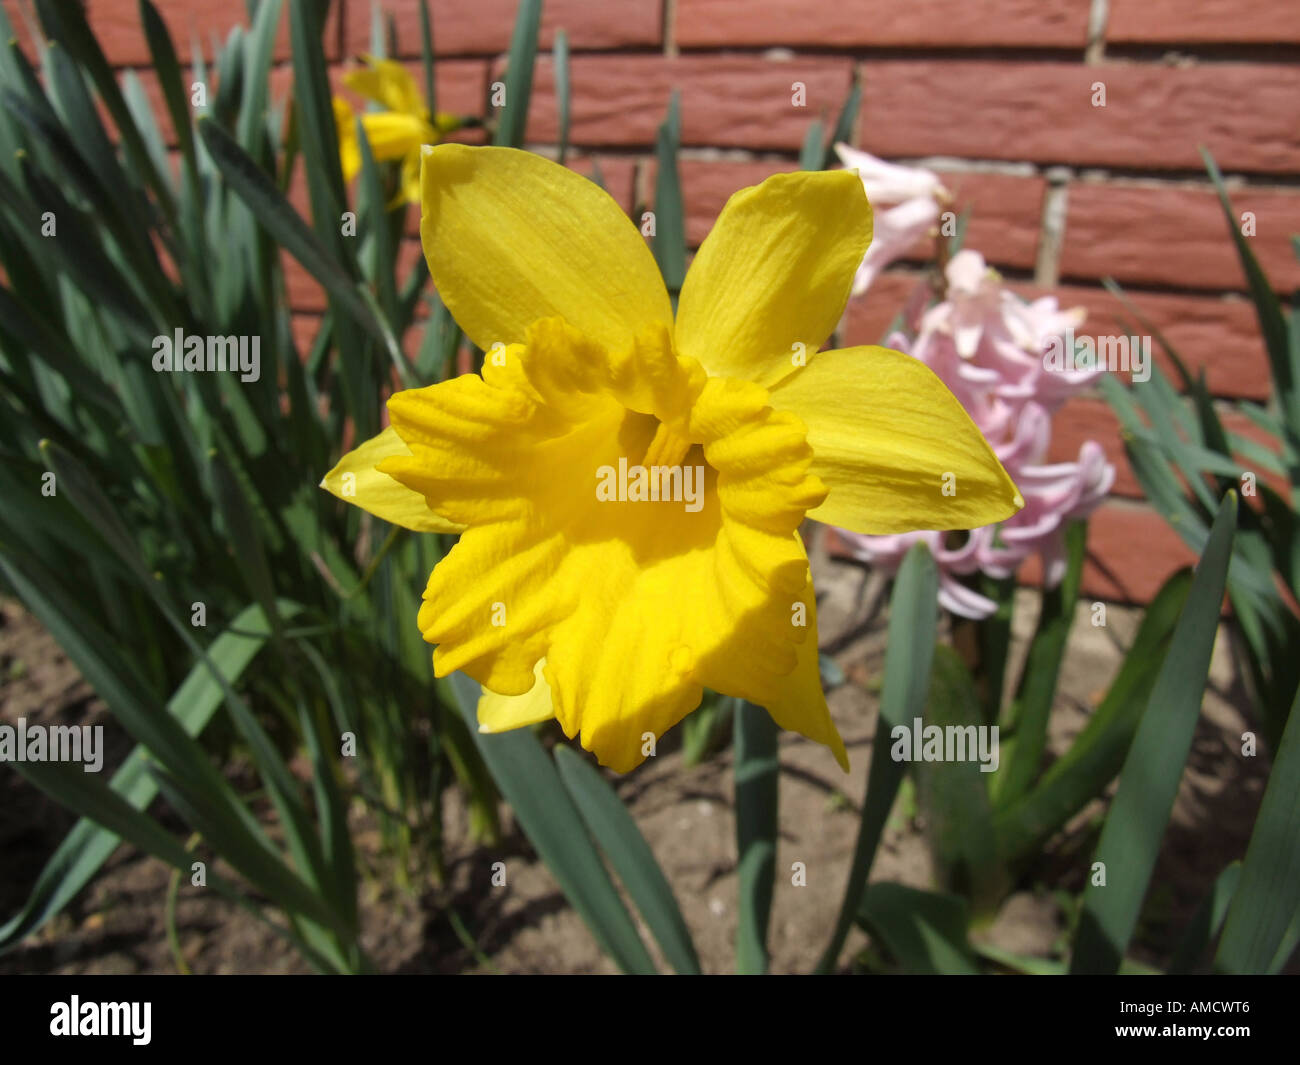 Daffodil close up Stock Photo